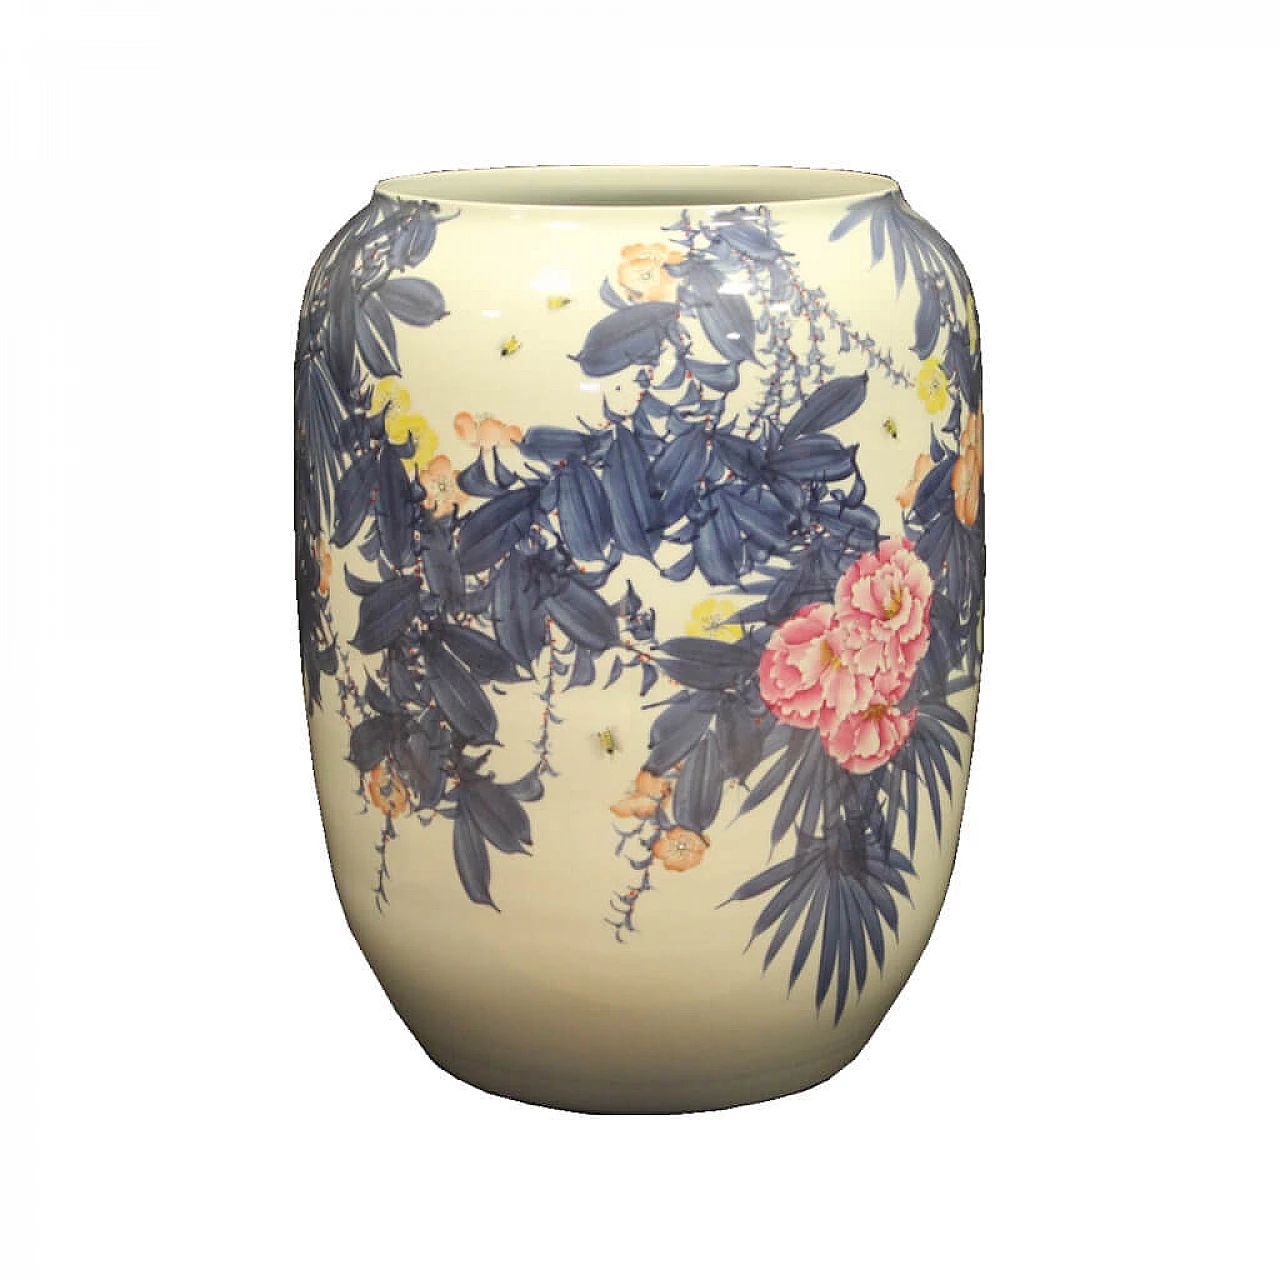 Grande vaso cinese in ceramica dipinta con fiori 1072435